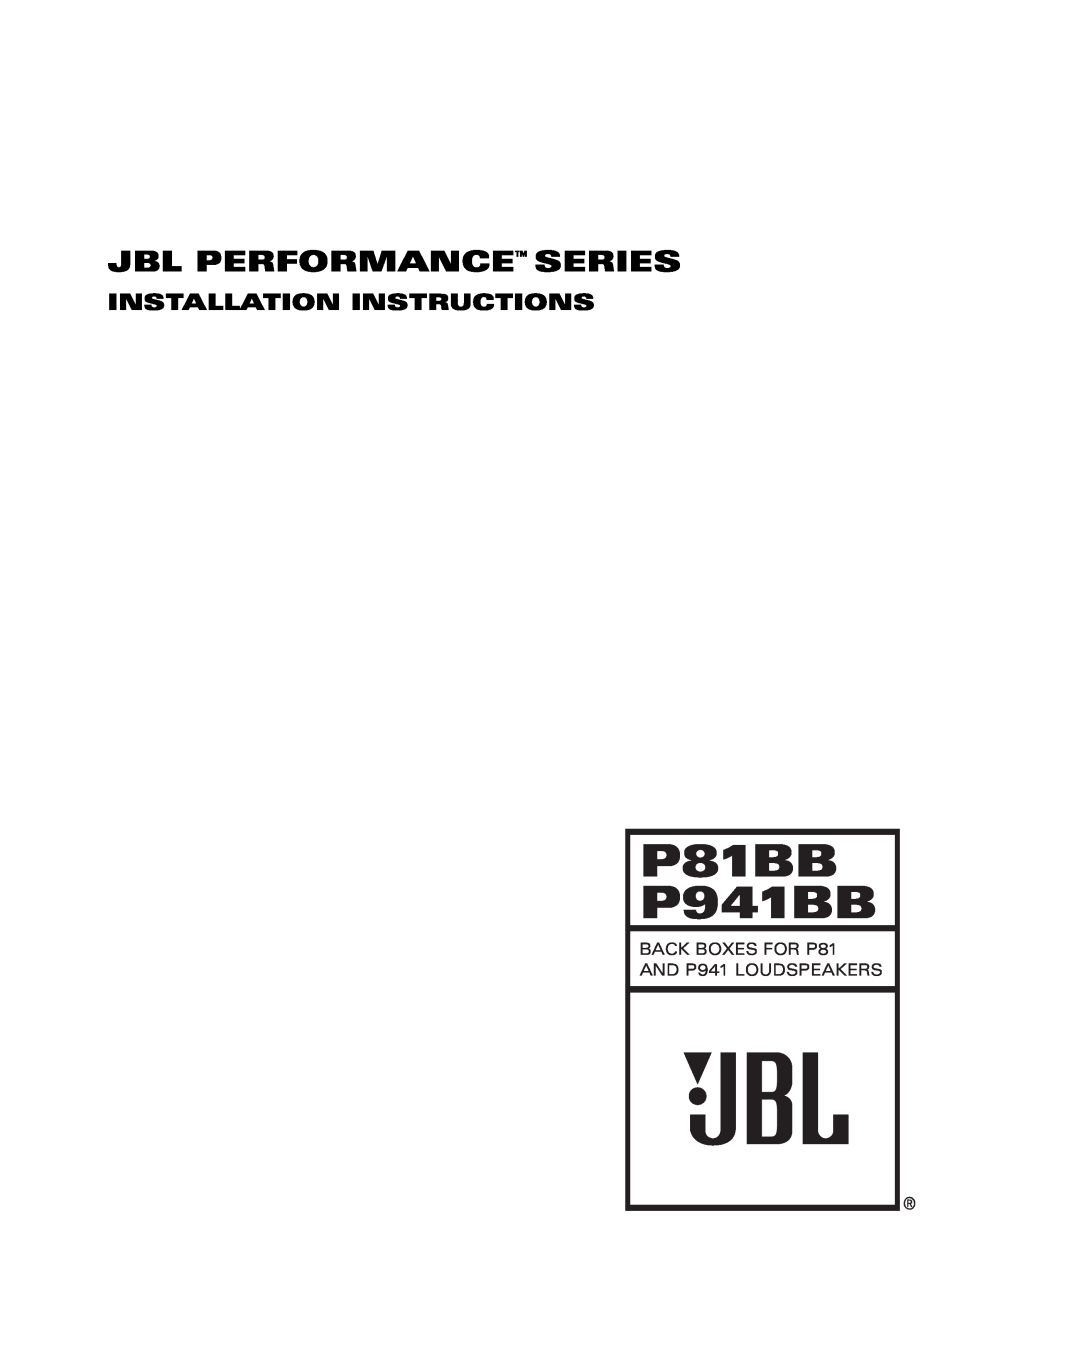 JBL installation instructions P81BB P941BB, Jbl Performance Series, Installation Instructions 